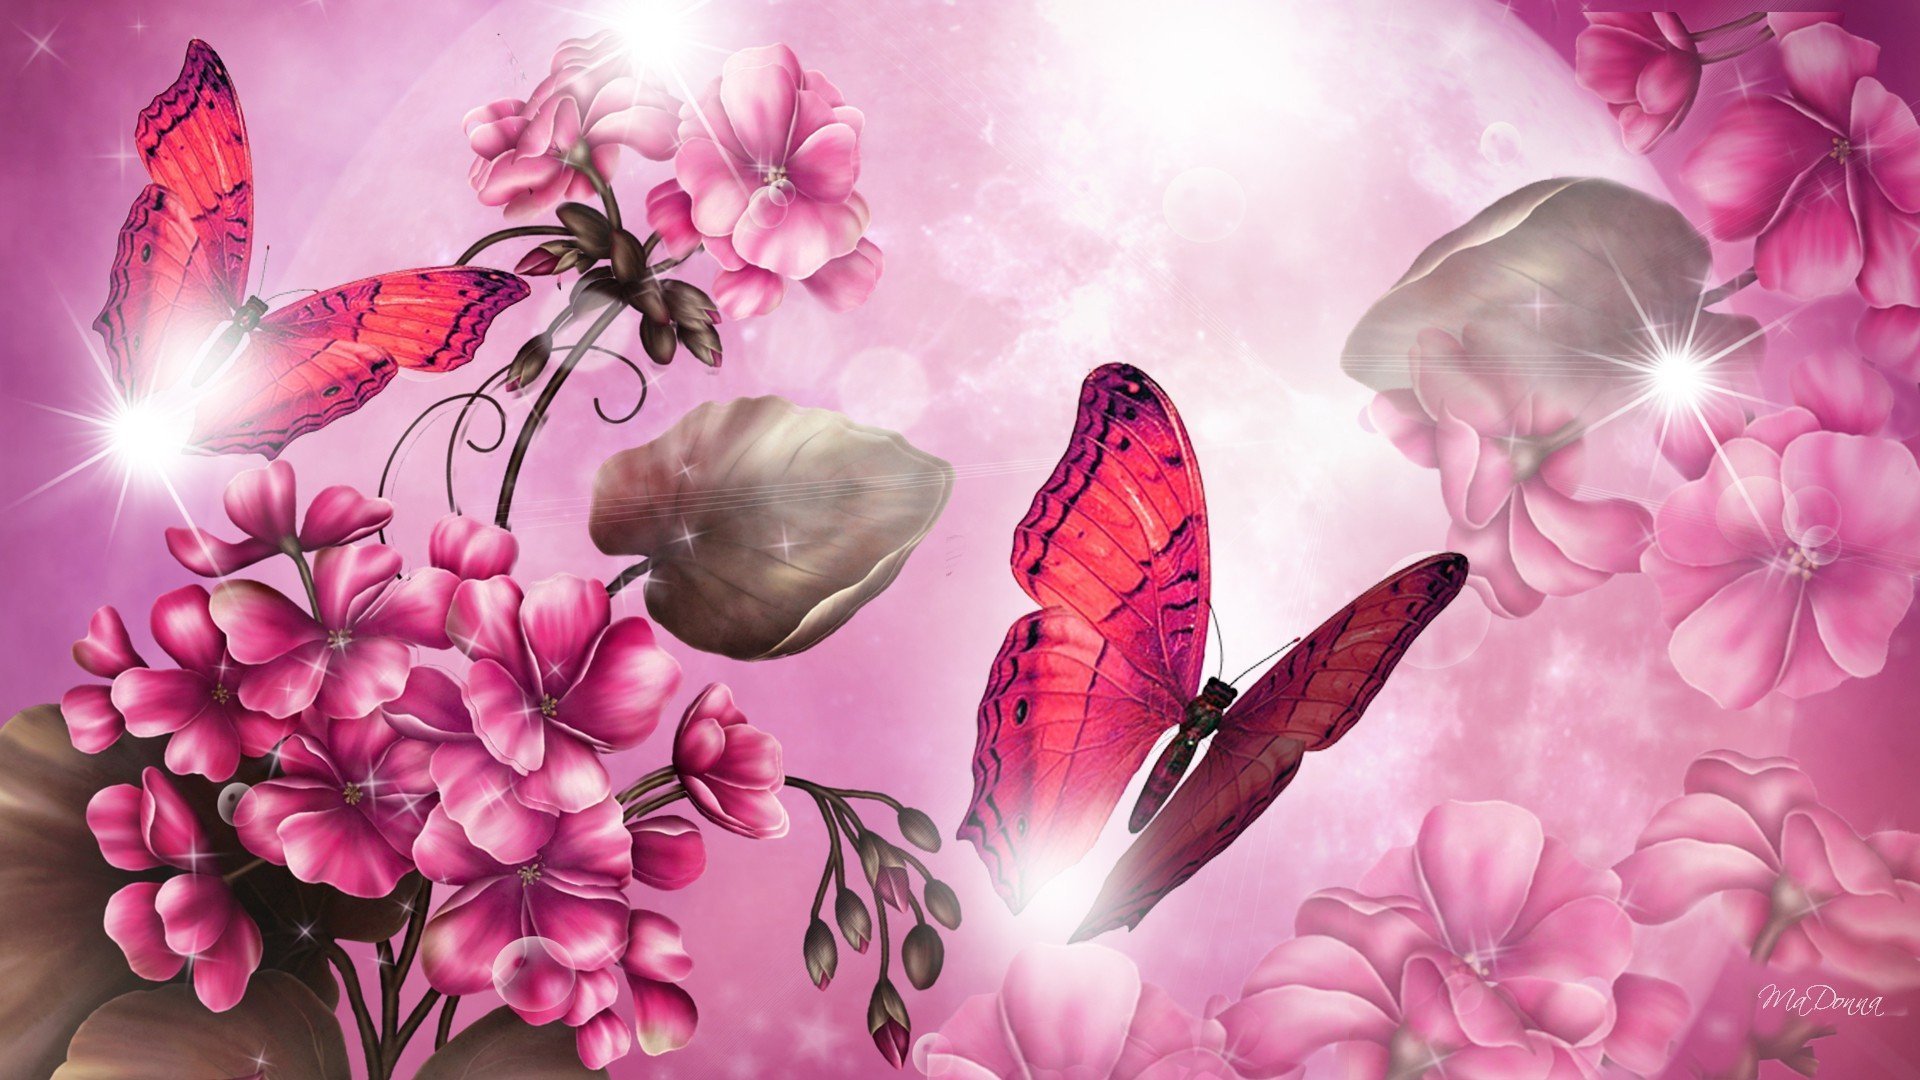 3 на красивом фоне. Фон бабочки. Розовые бабочки. Бабочка на цветке. Фотообои с бабочками и цветами.